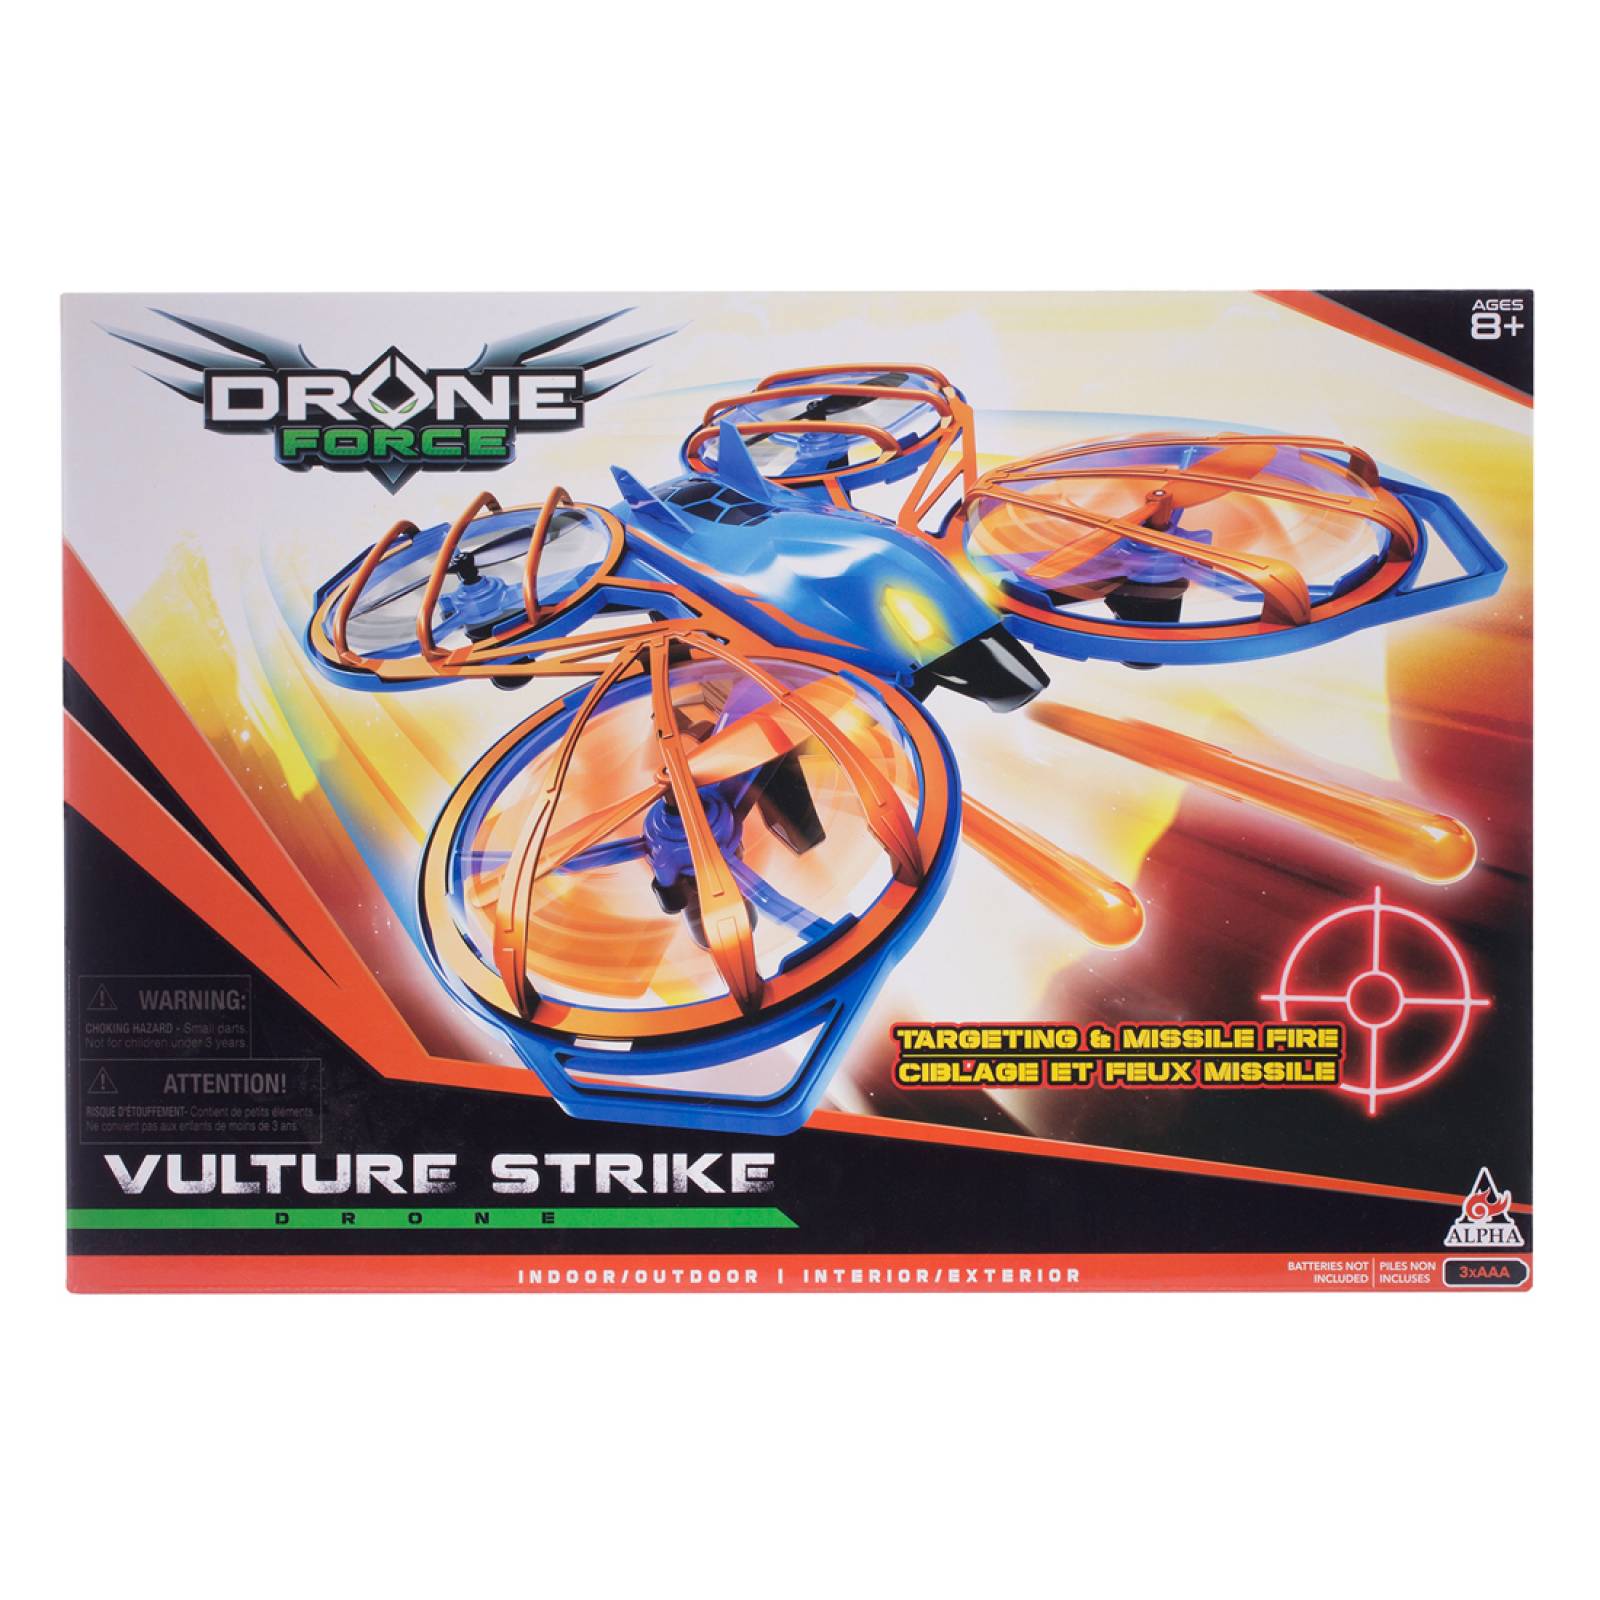 Drone Force Juguete Interiores Avion Vulture Strike Toys